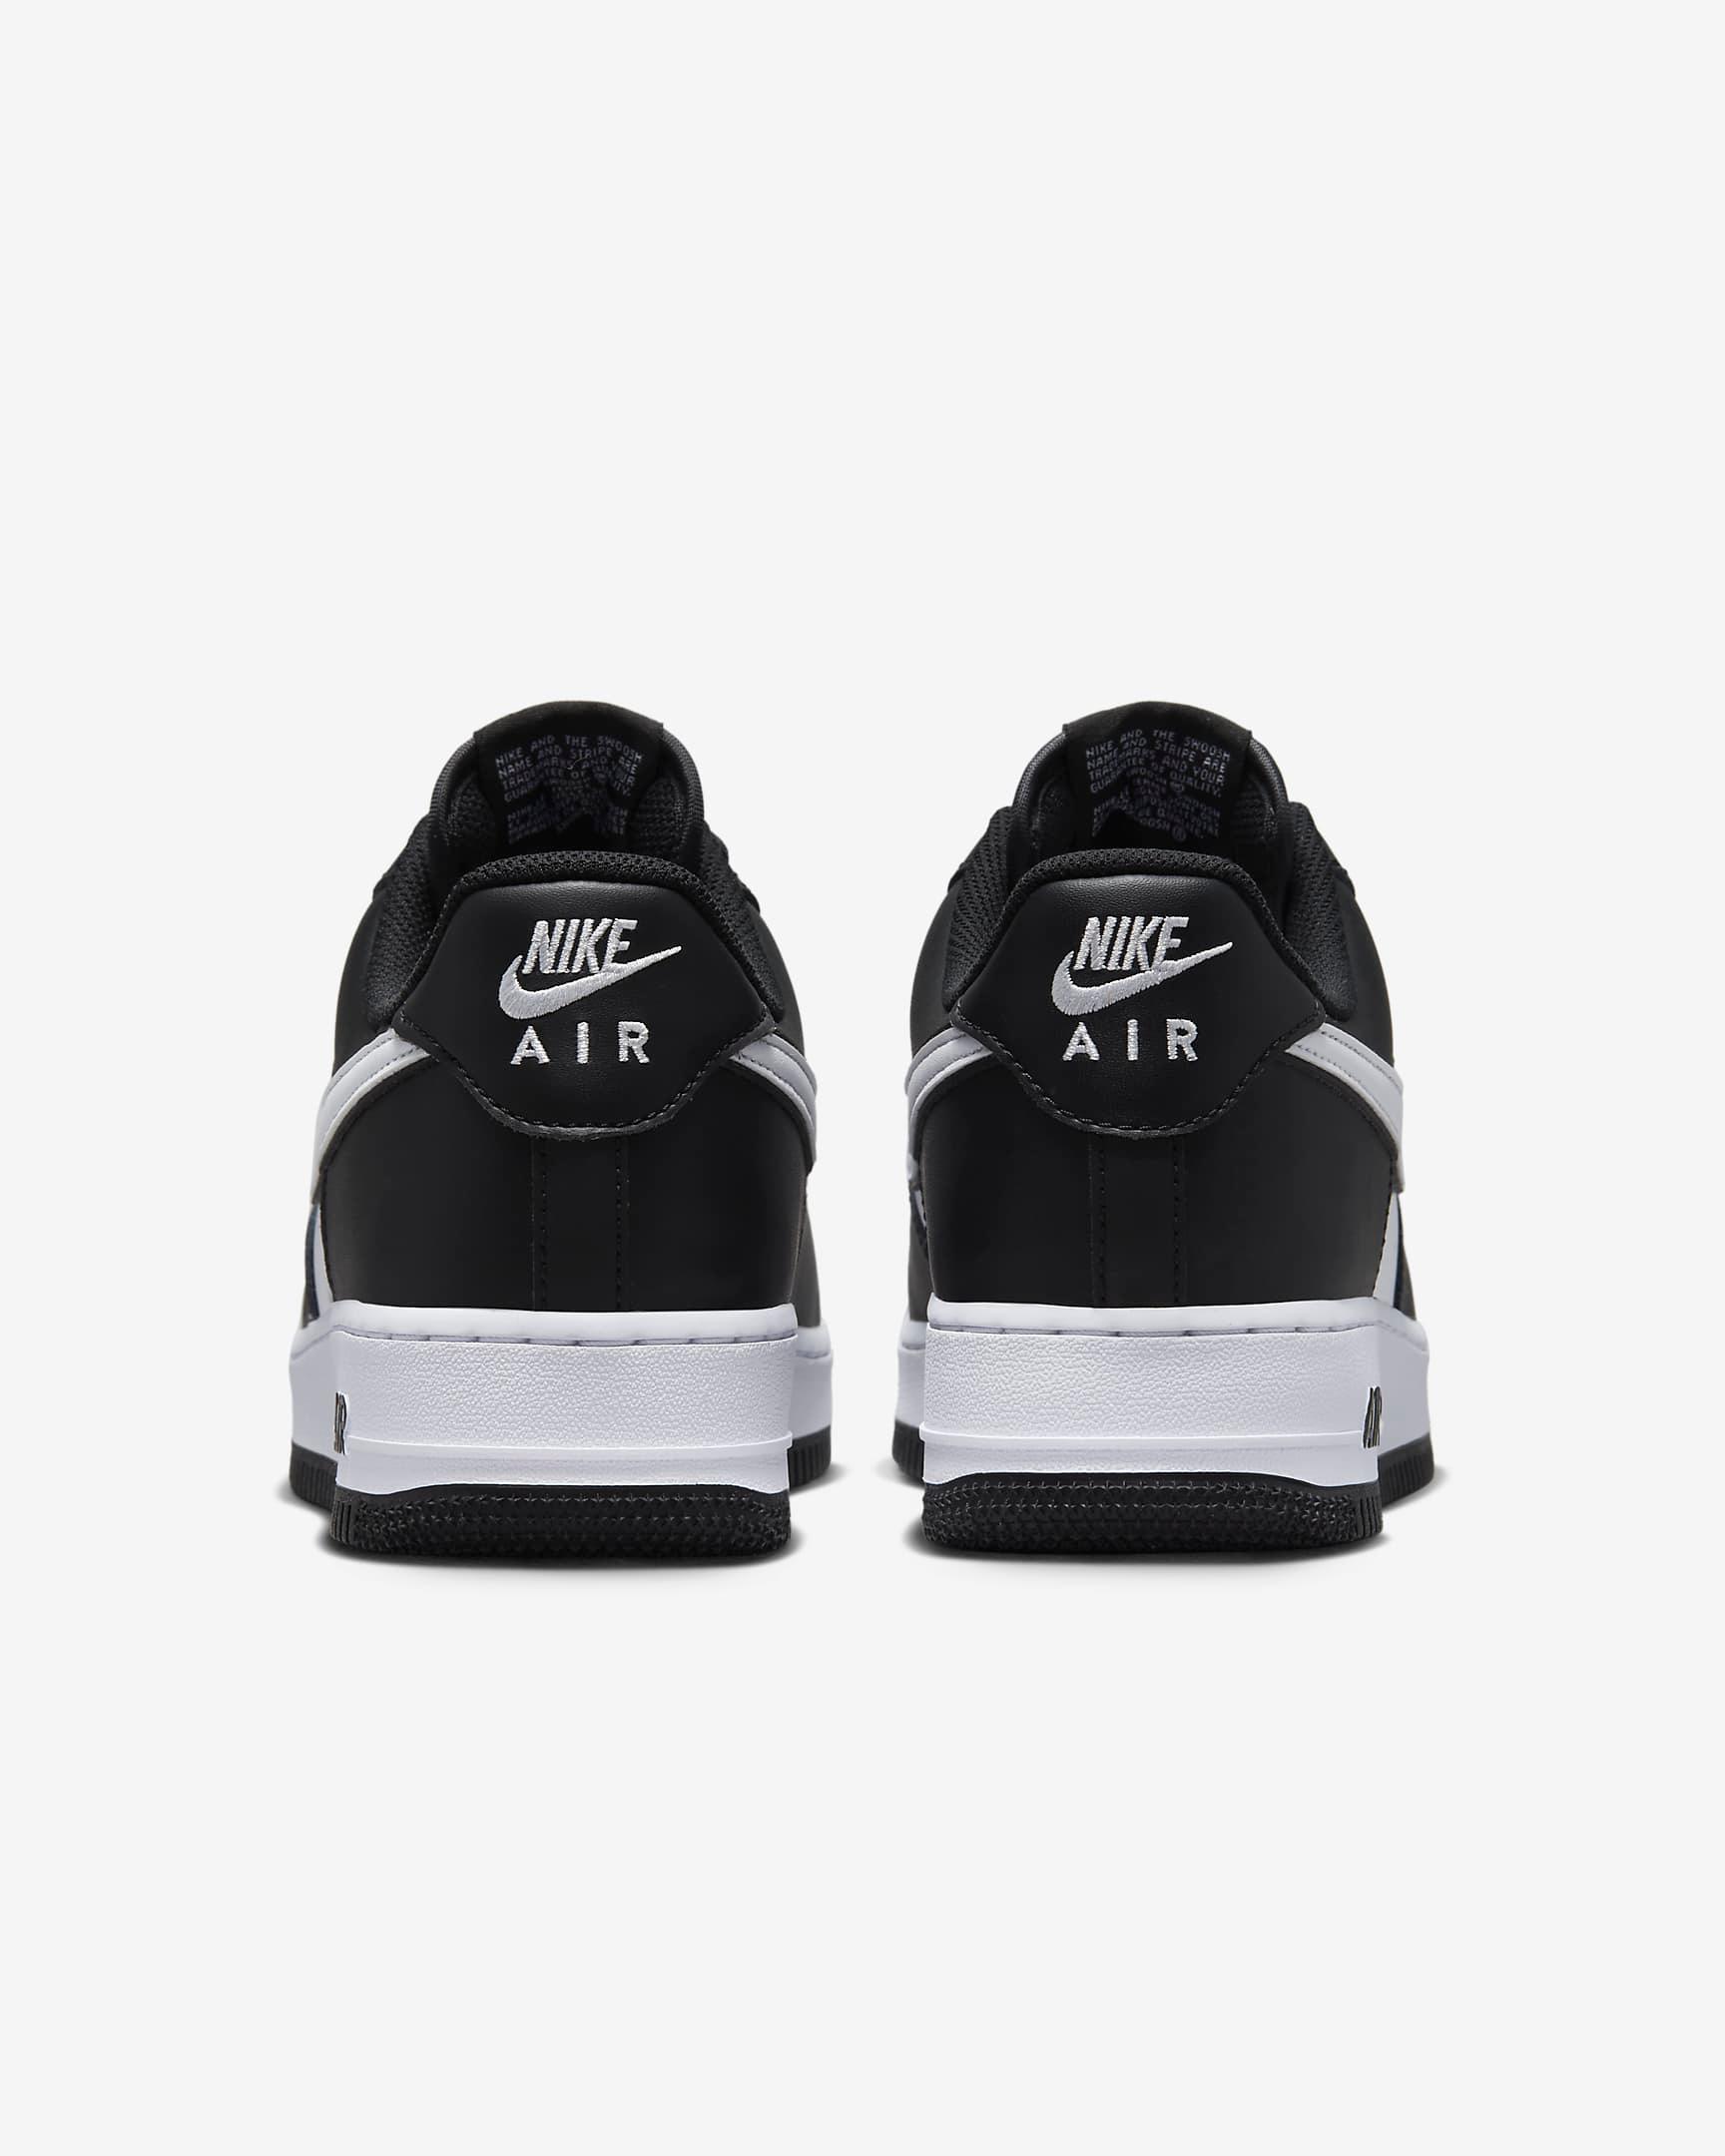 Giày Nike Air Force 1 '07 Men Shoes #Black White - Kallos Vietnam